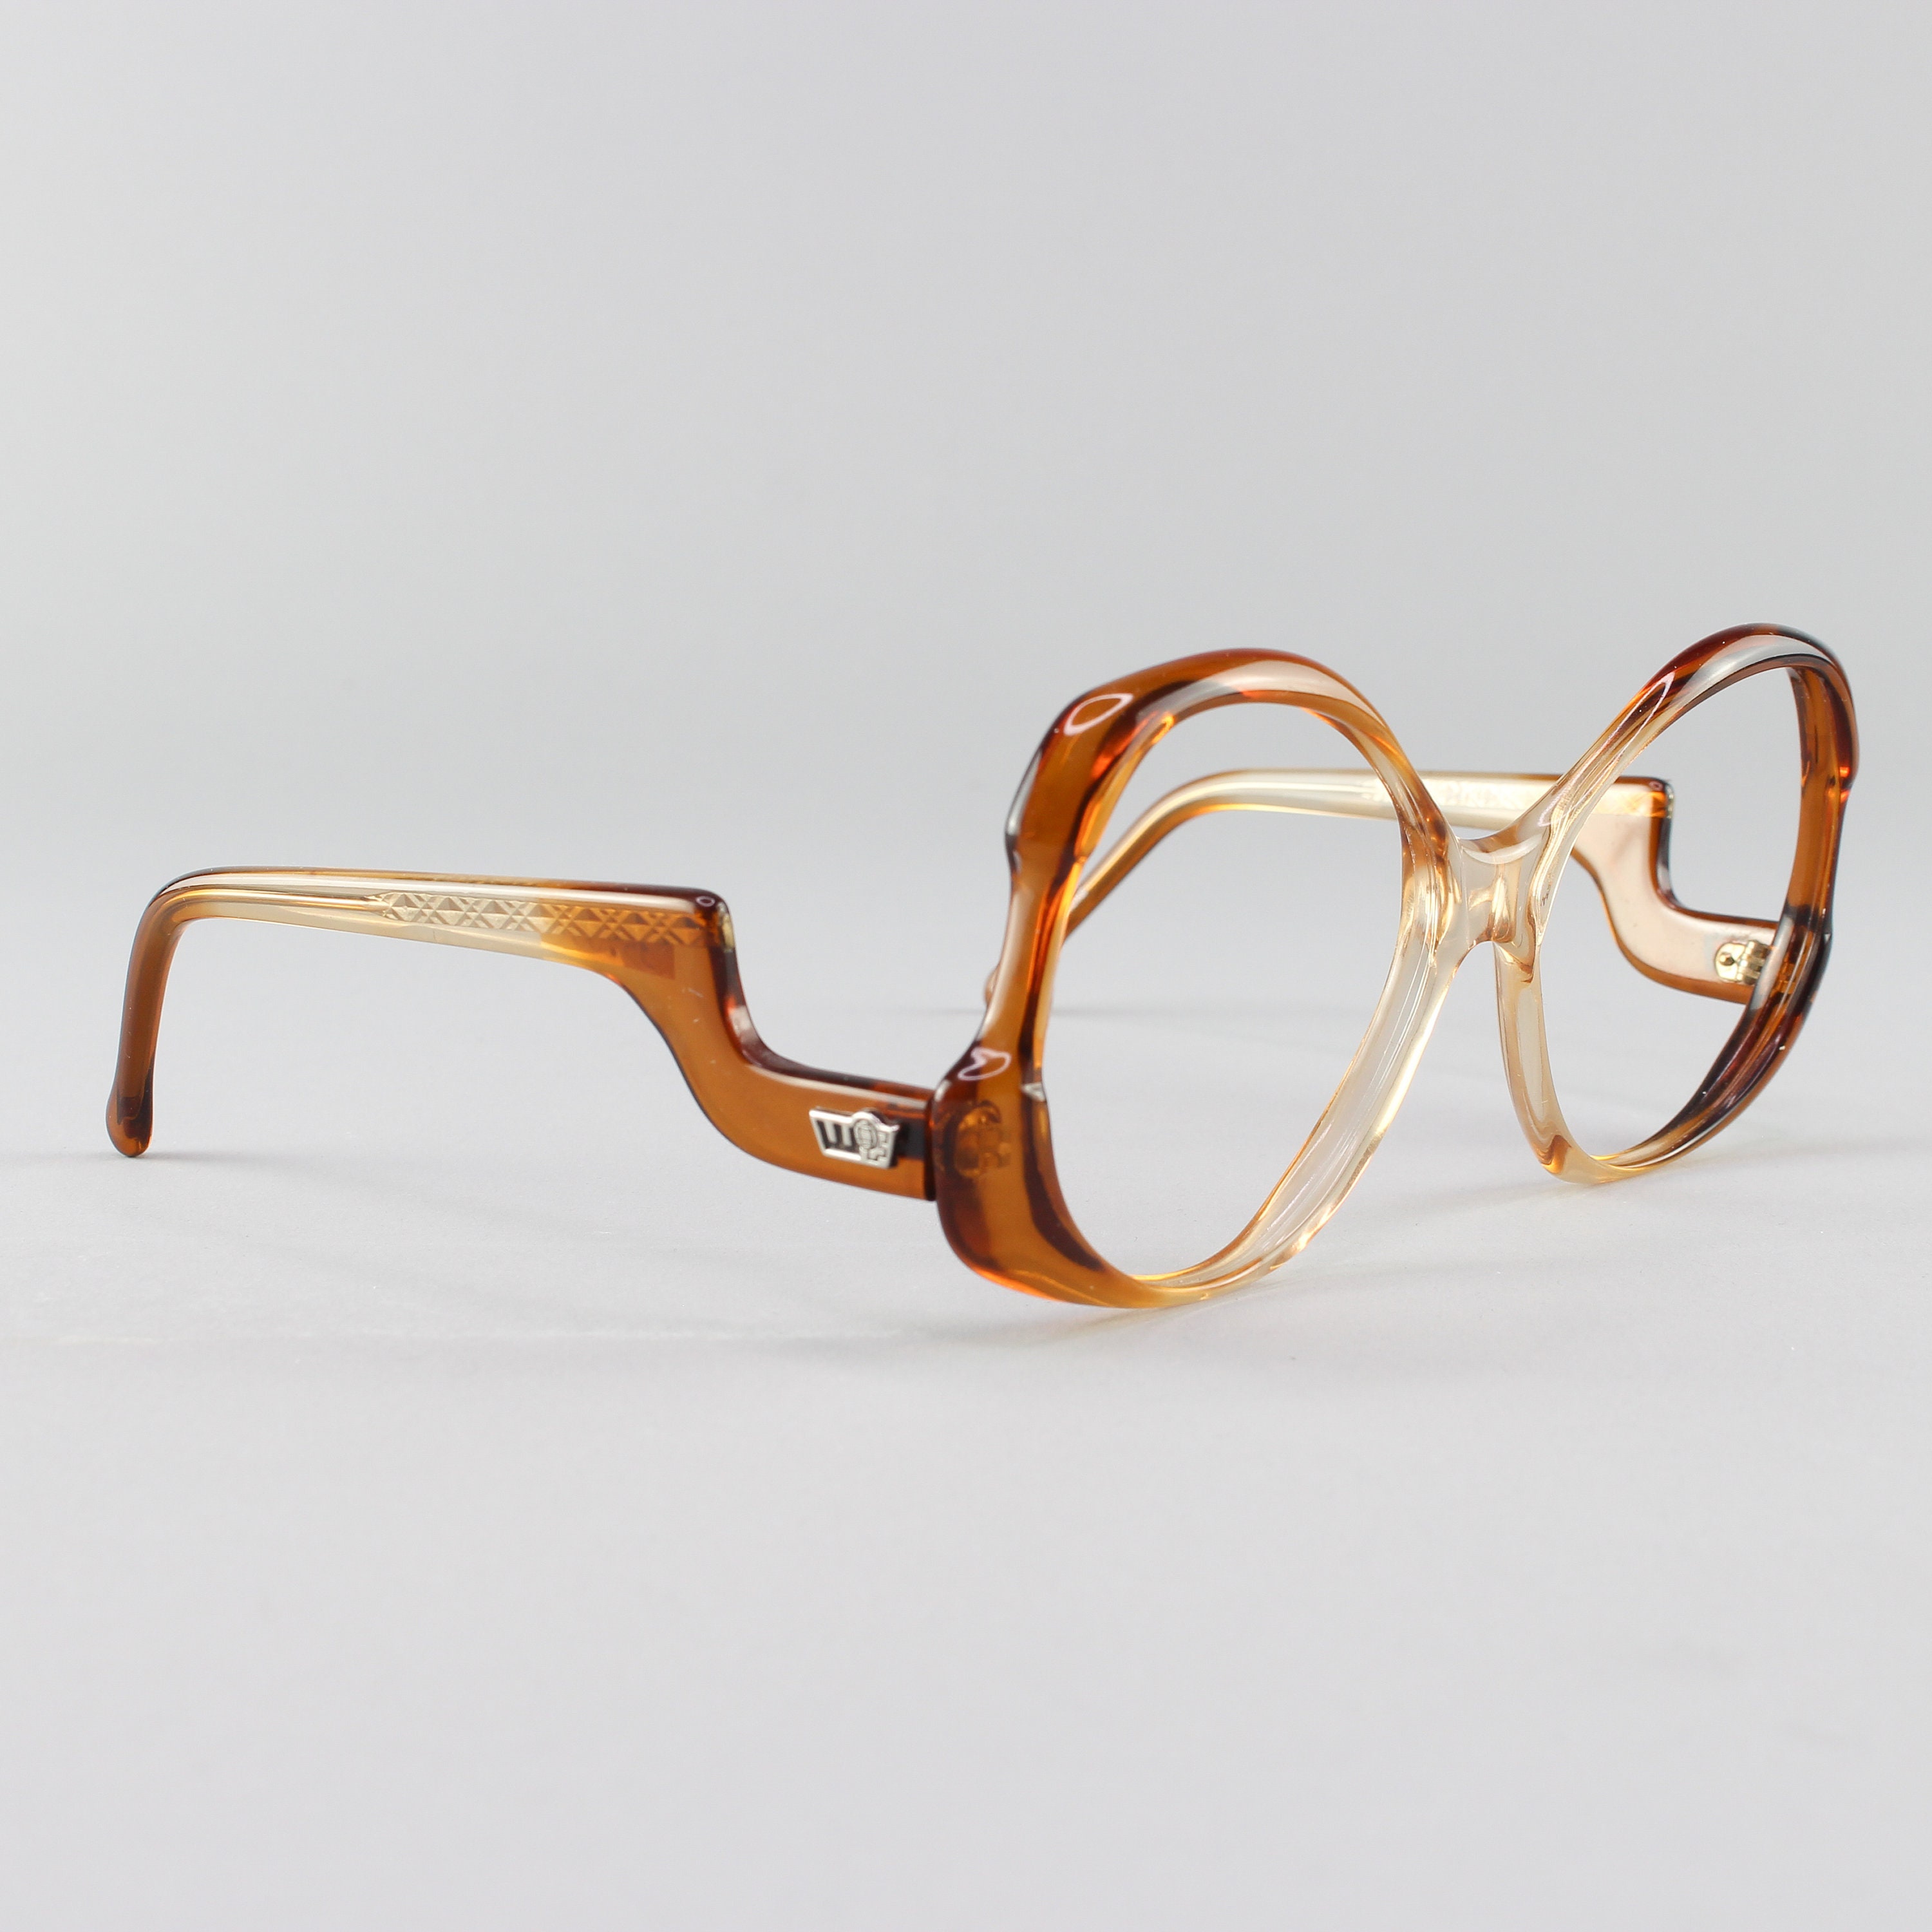 Vintage 80s Glasses Oversized Round Eyeglasses 1980s Brown Etsy